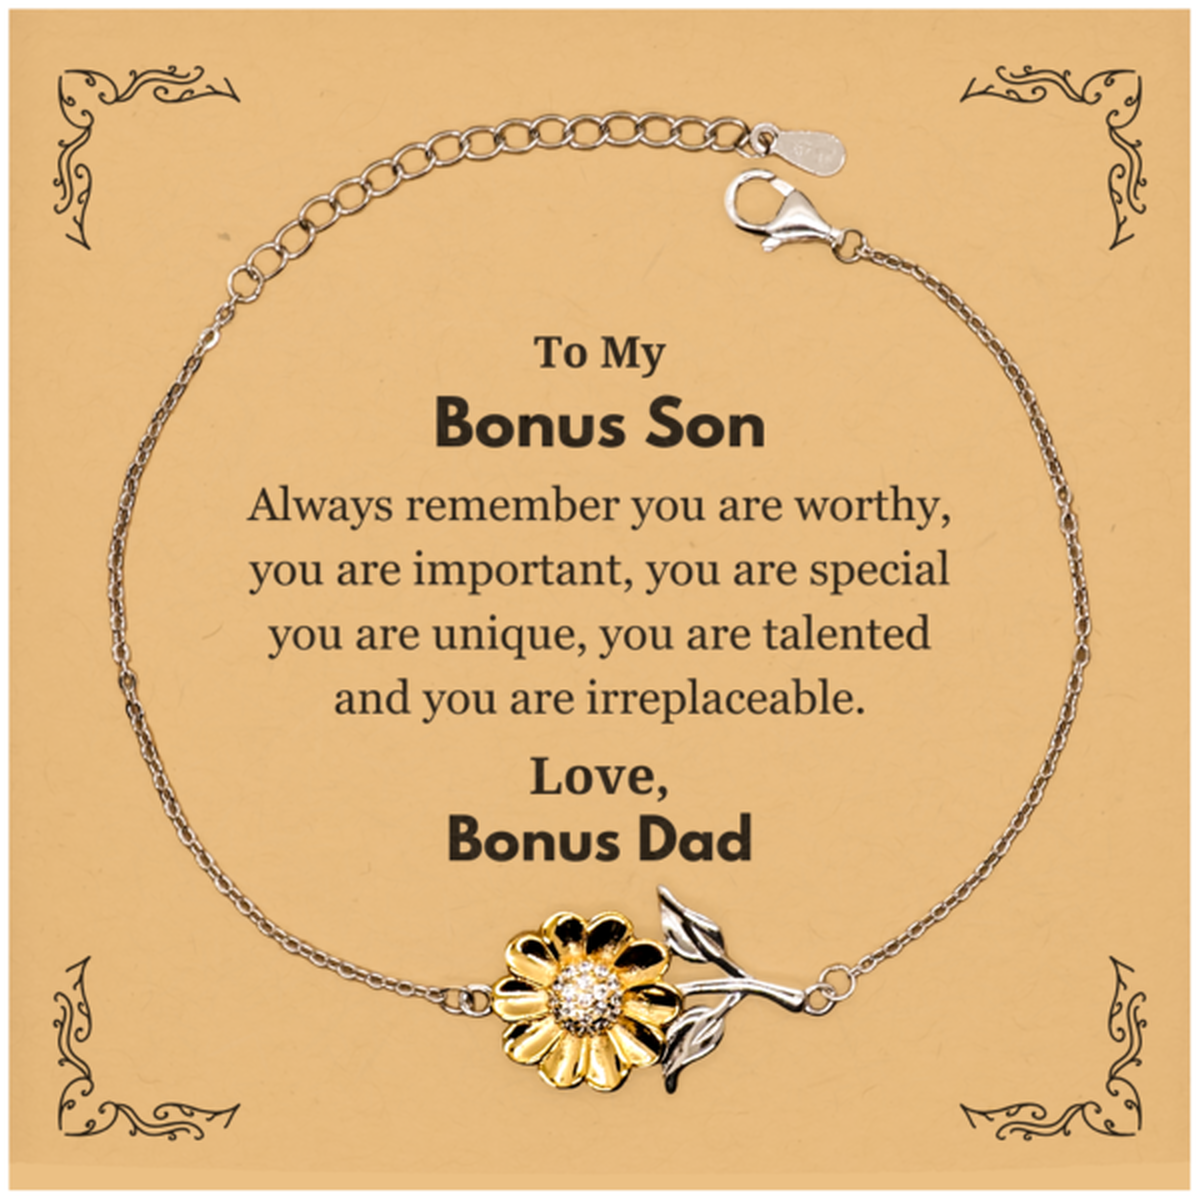 Bonus Son Birthday Gifts from Bonus Dad, Inspirational Sunflower Bracelet for Bonus Son Christmas Graduation Gifts for Bonus Son Always remember you are worthy, you are important. Love, Bonus Dad